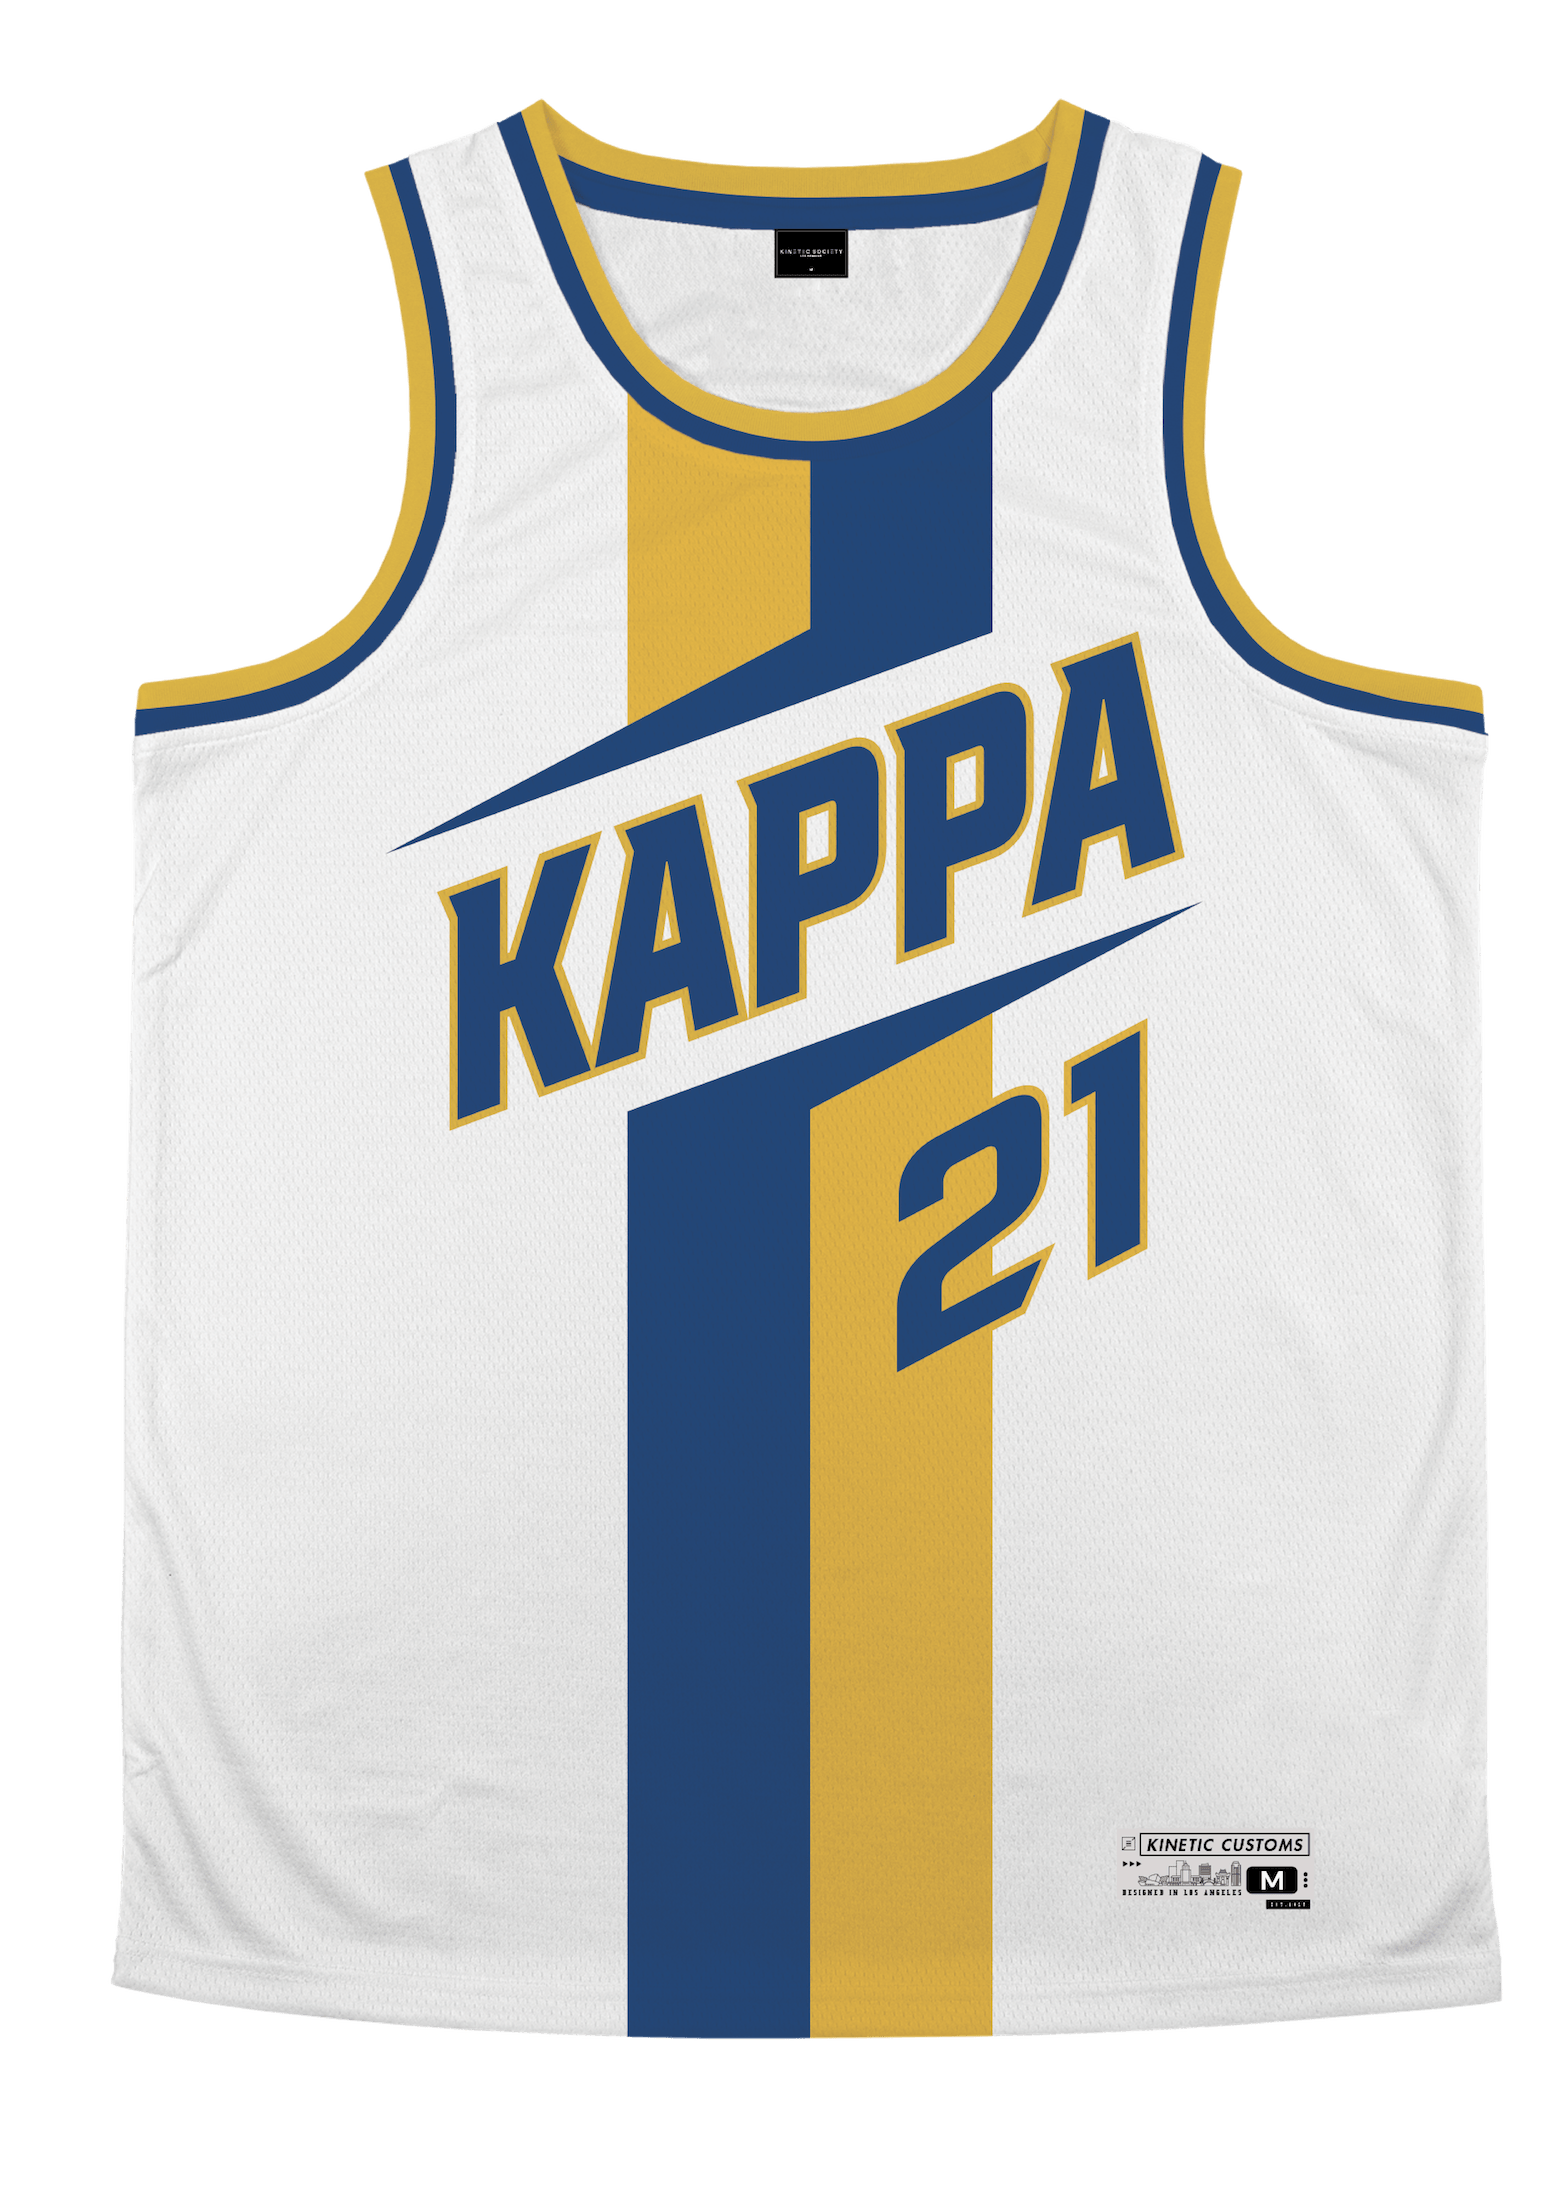 rynker medley kaste Kappa Kappa Gamma - Middle Child Basketball Jersey – Kinetic Society LLC